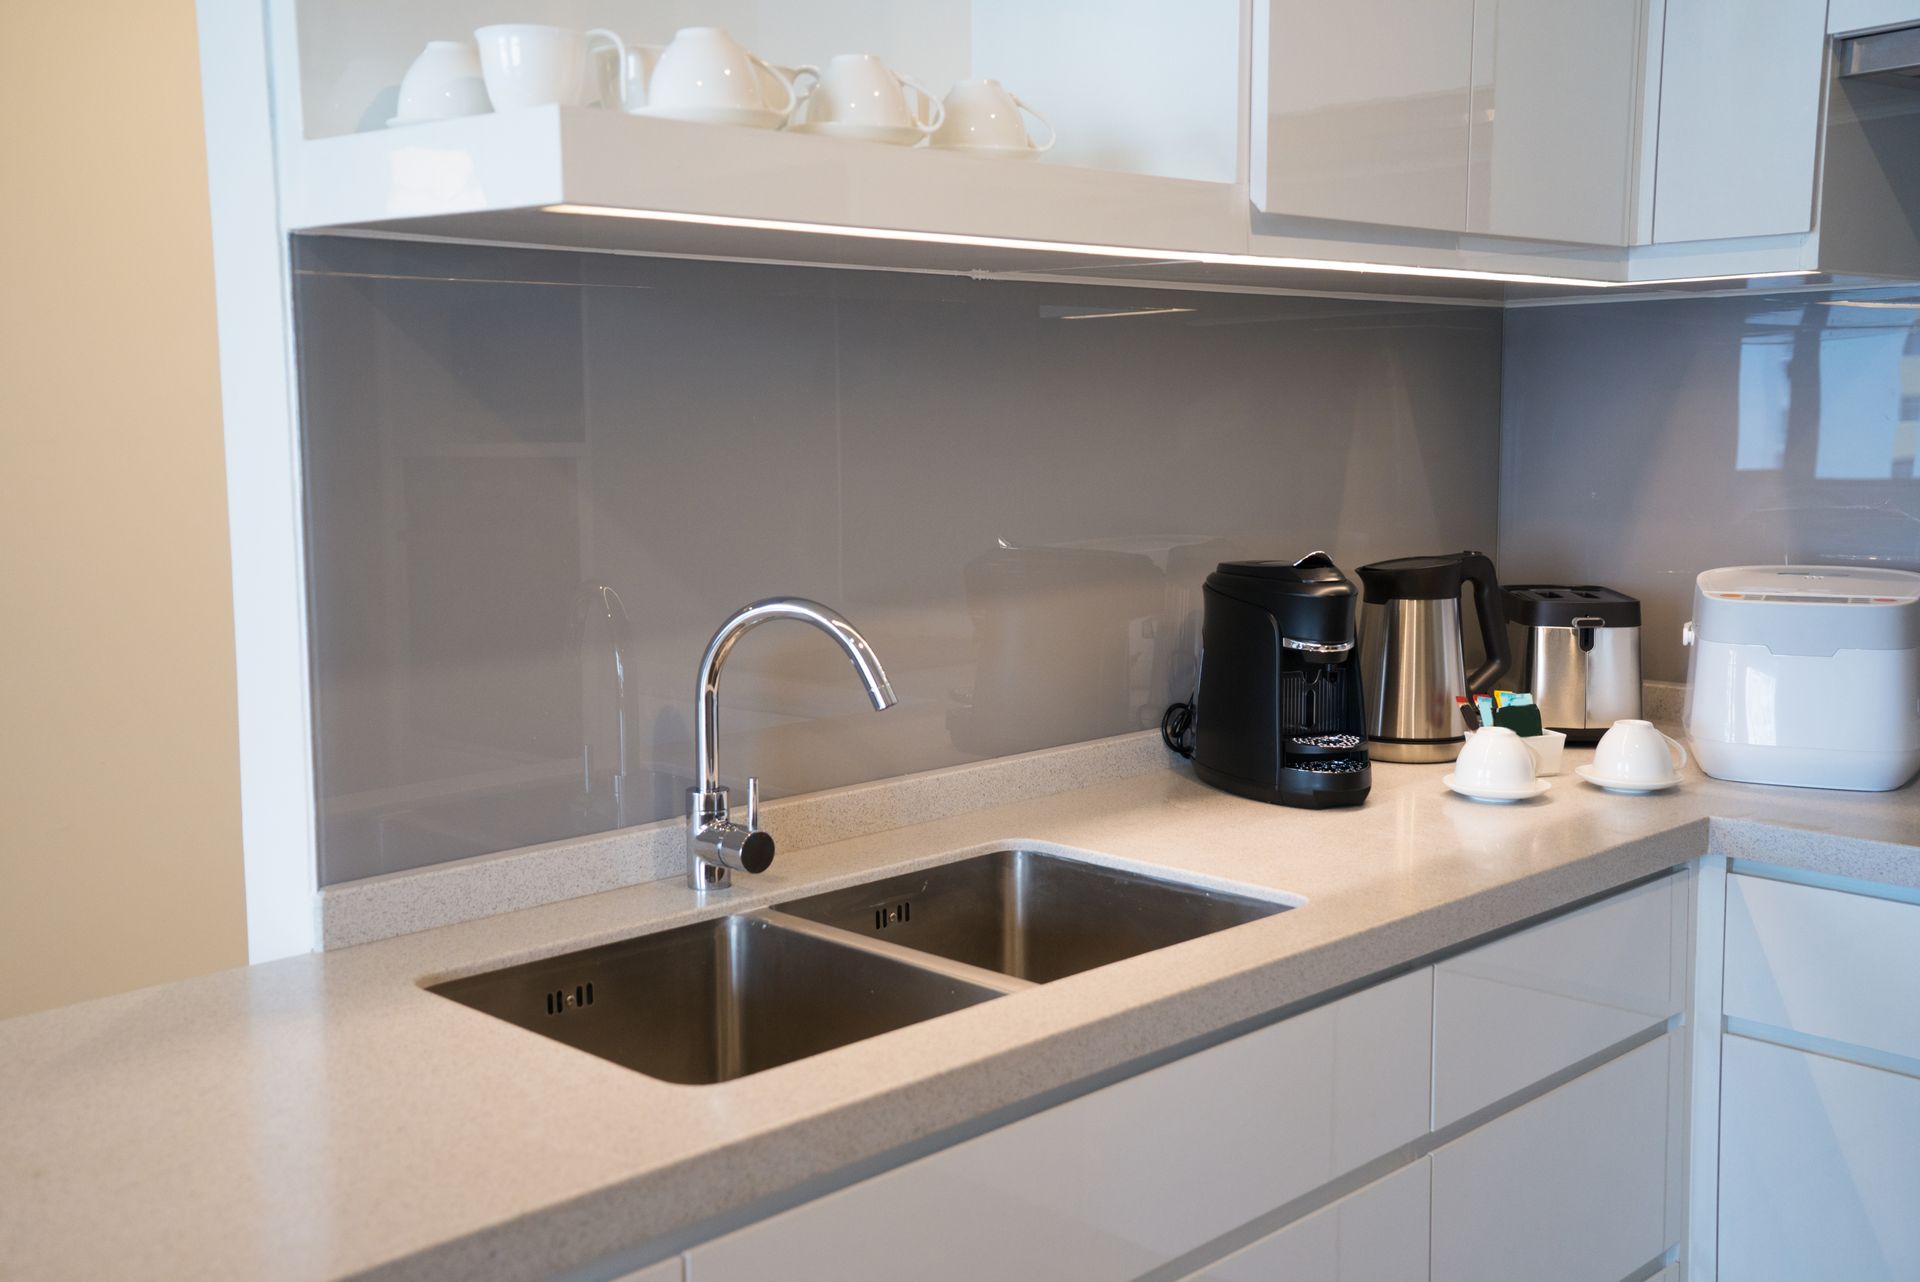 minimalistic kitchen corner with appliances